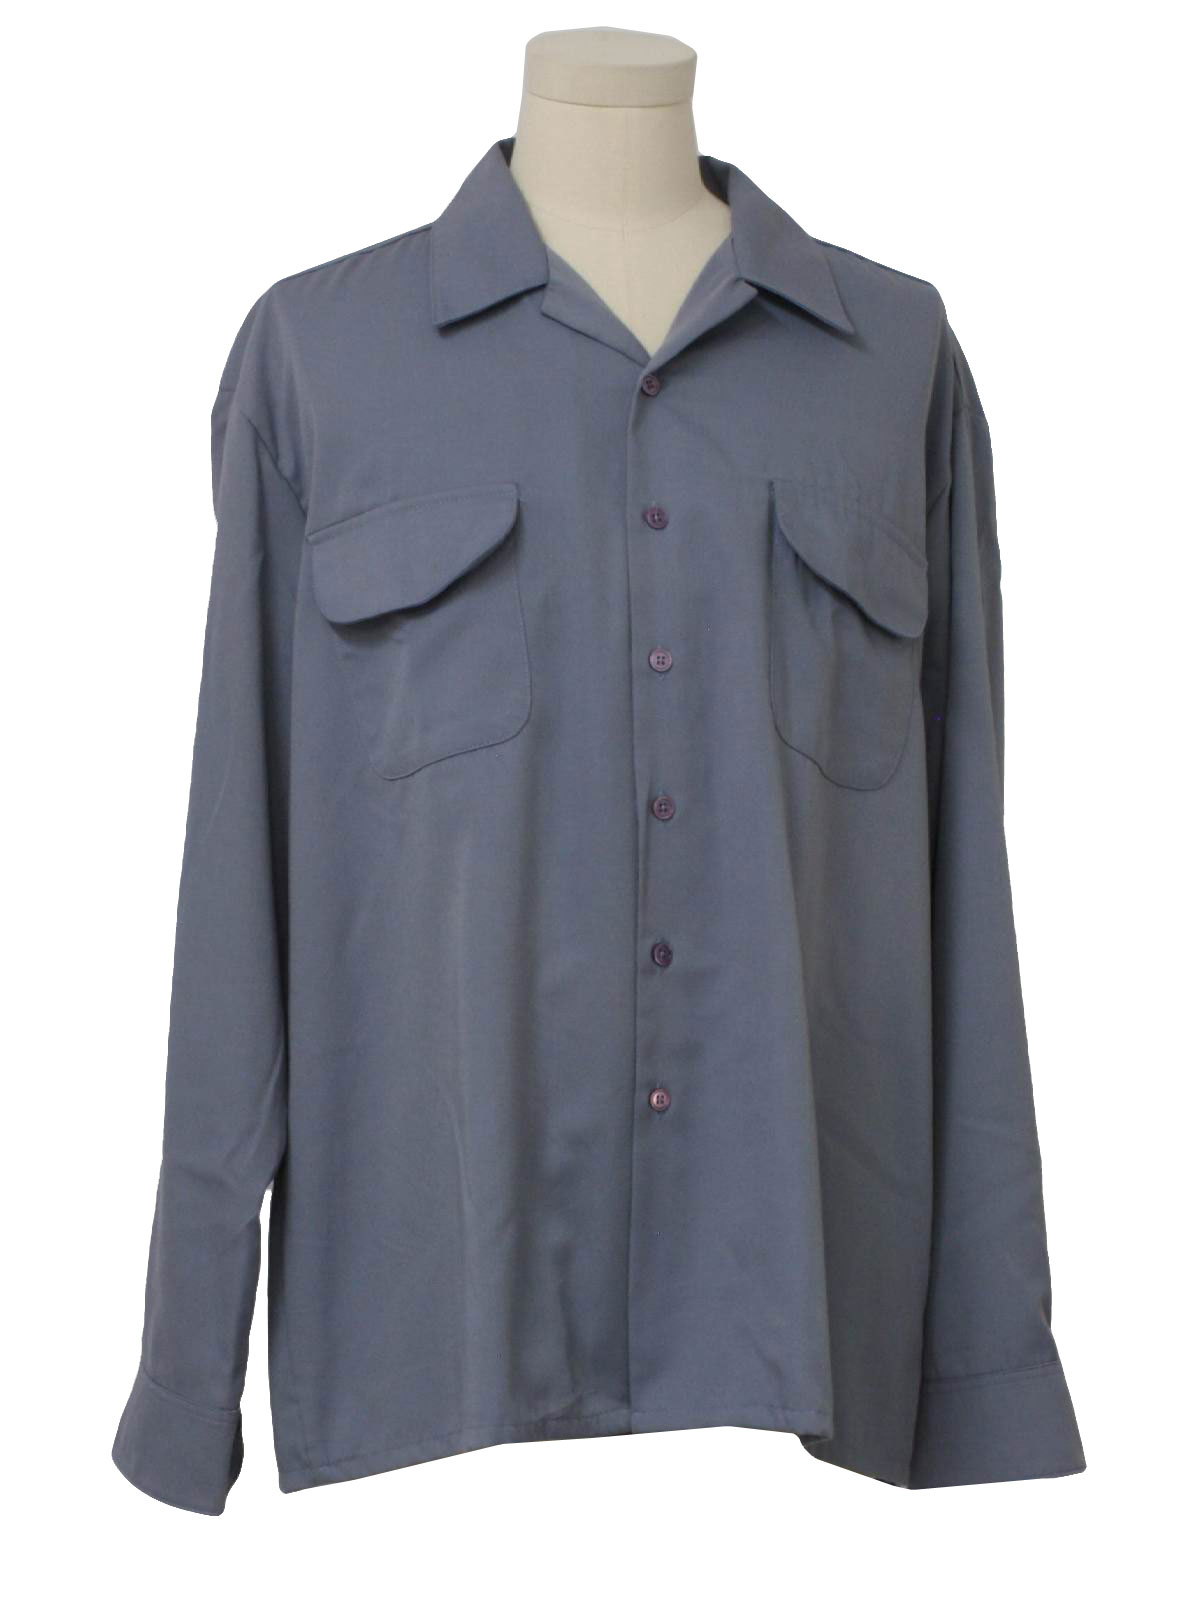 Retro 1950s Gabardine Shirt: 50s (Made in 90s) -Kennington- Mens gray